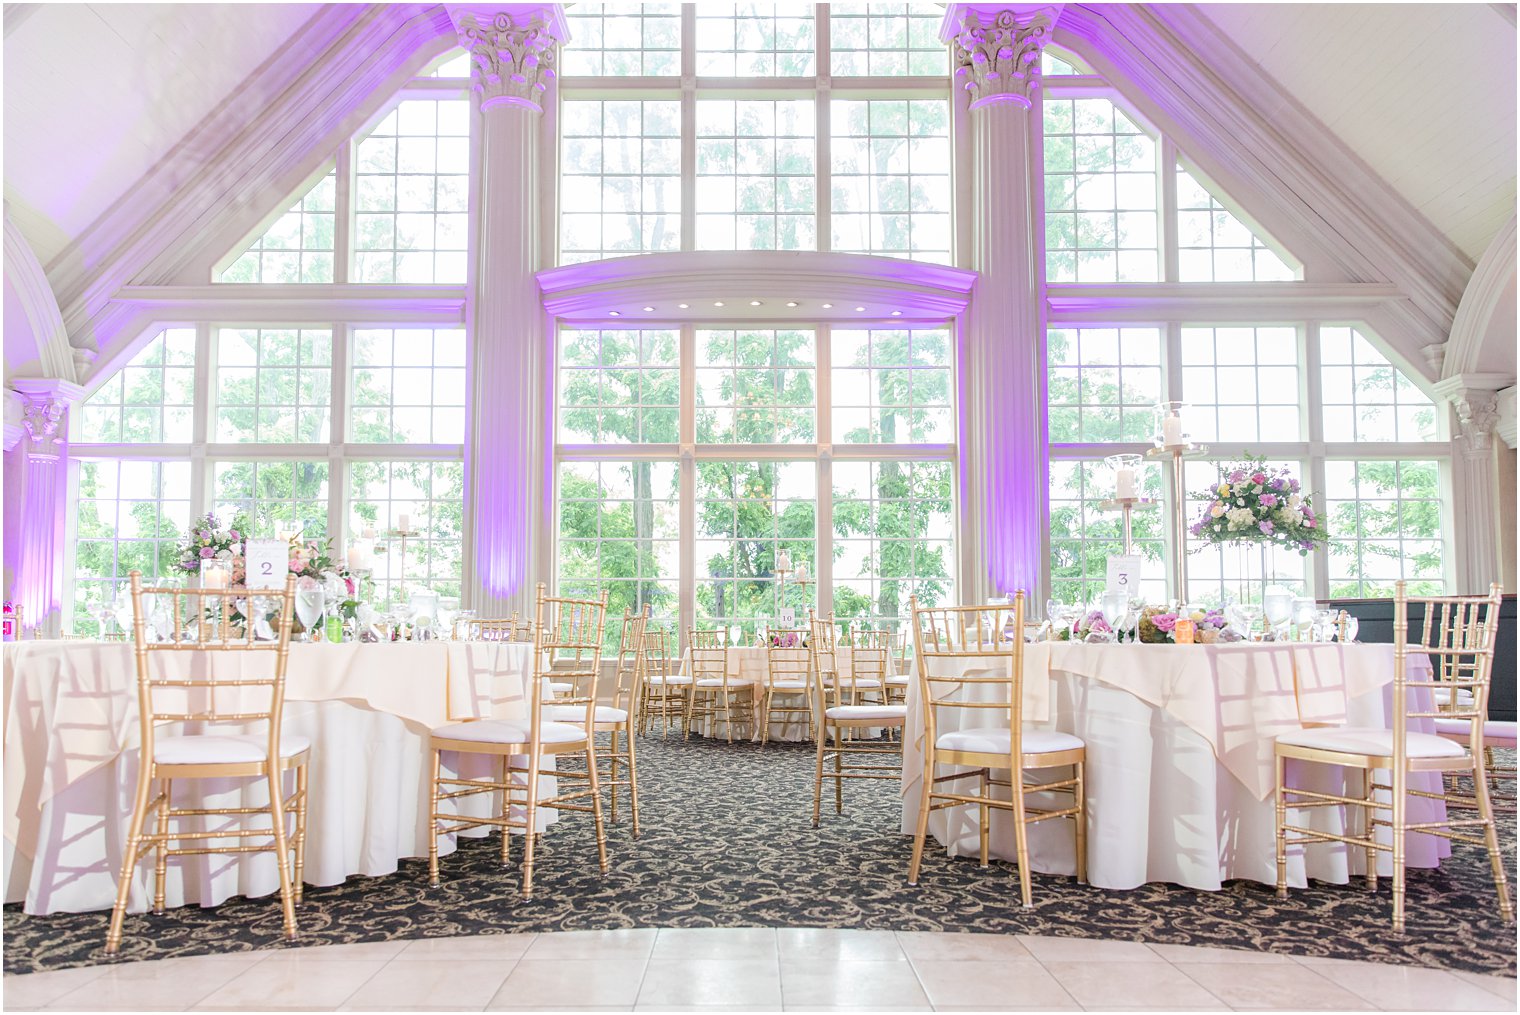 classic ballroom wedding reception at Ashford Estate with purple uplighting 